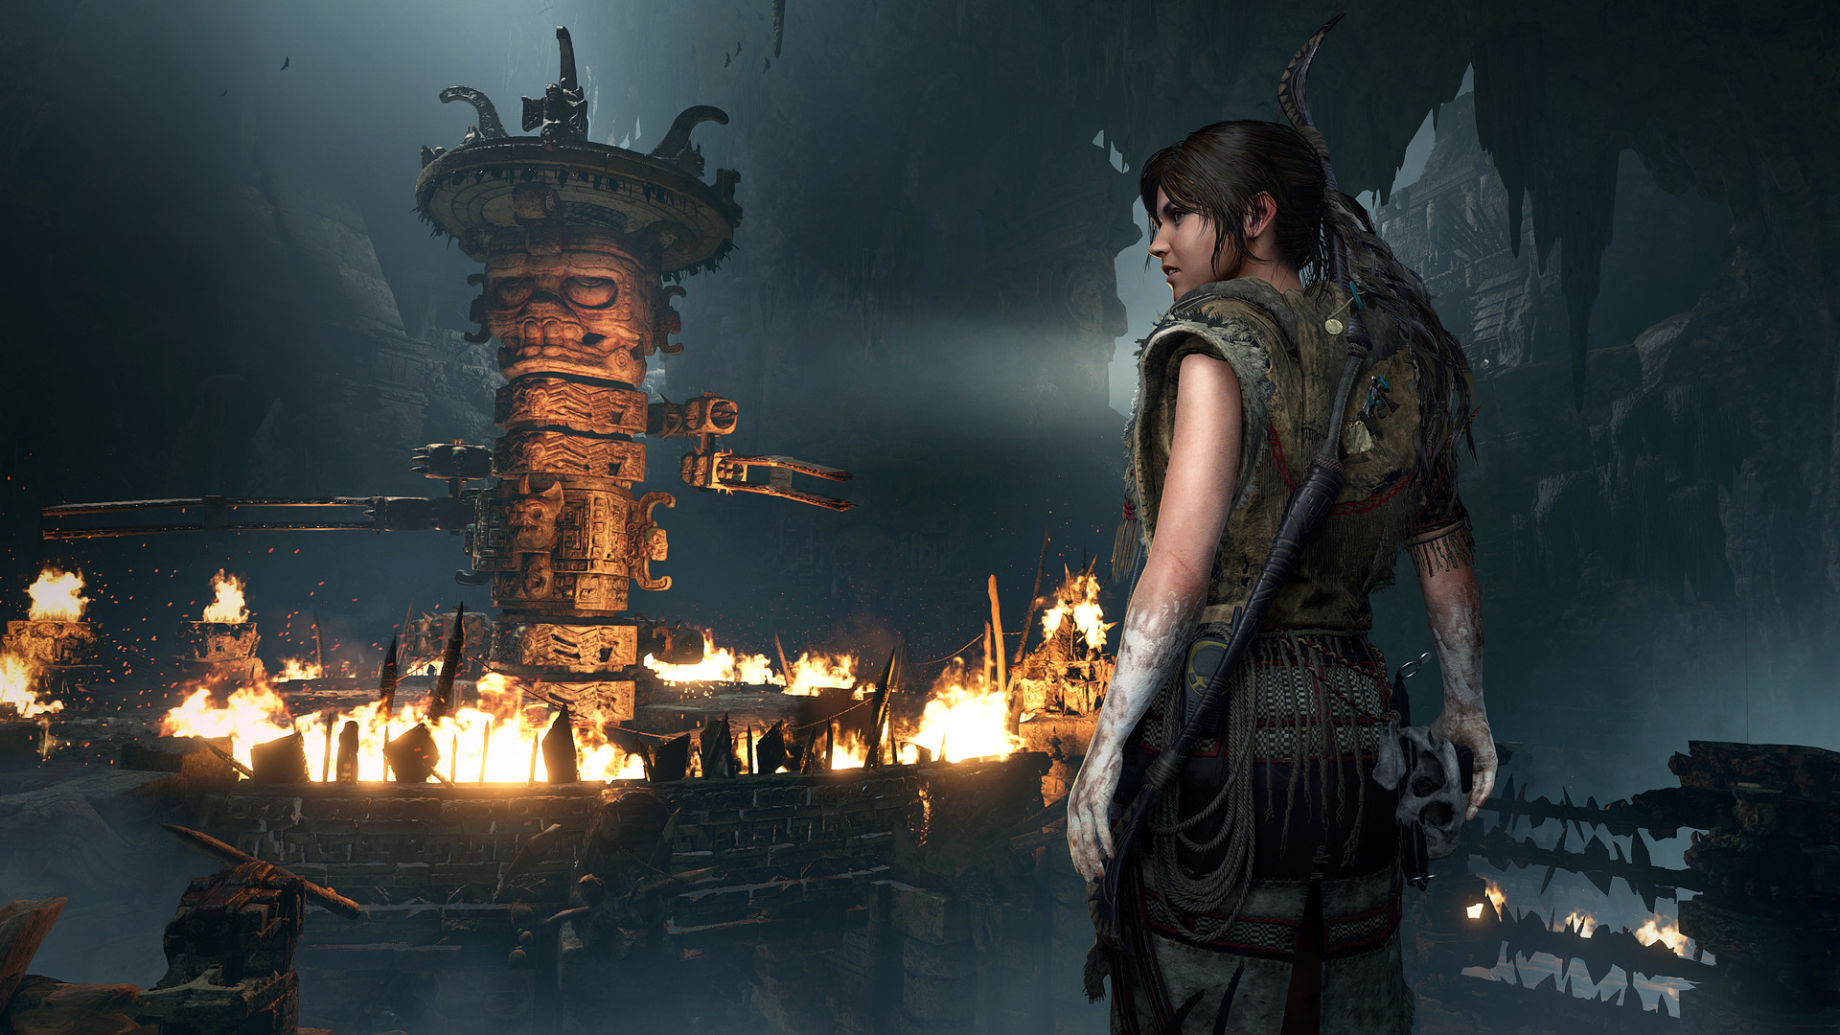 Tomb Raider: Definitive Edition - Metacritic